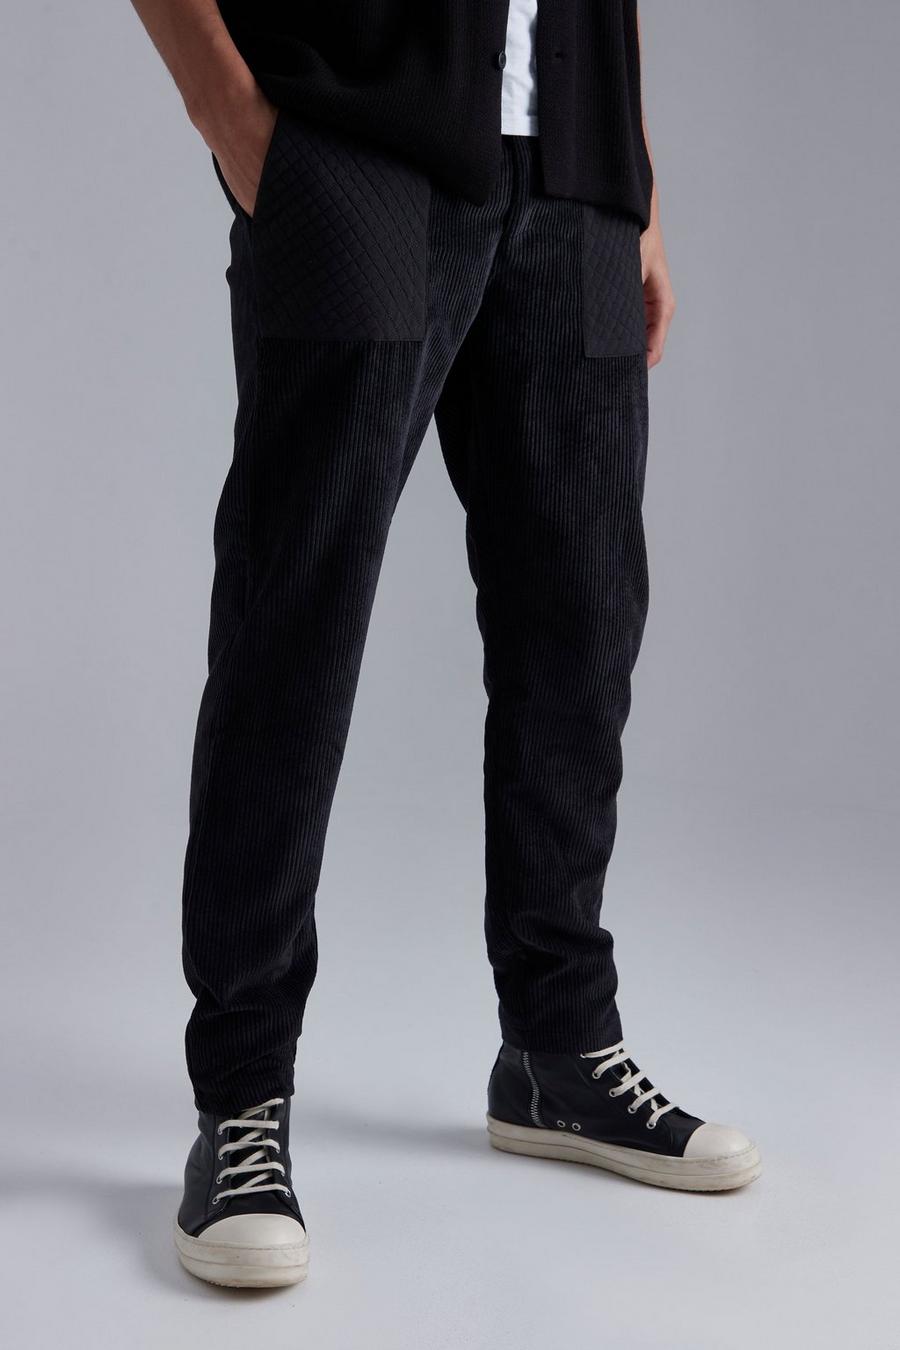 Pantalón Tall ajustado de pana con bolsillo, Black negro